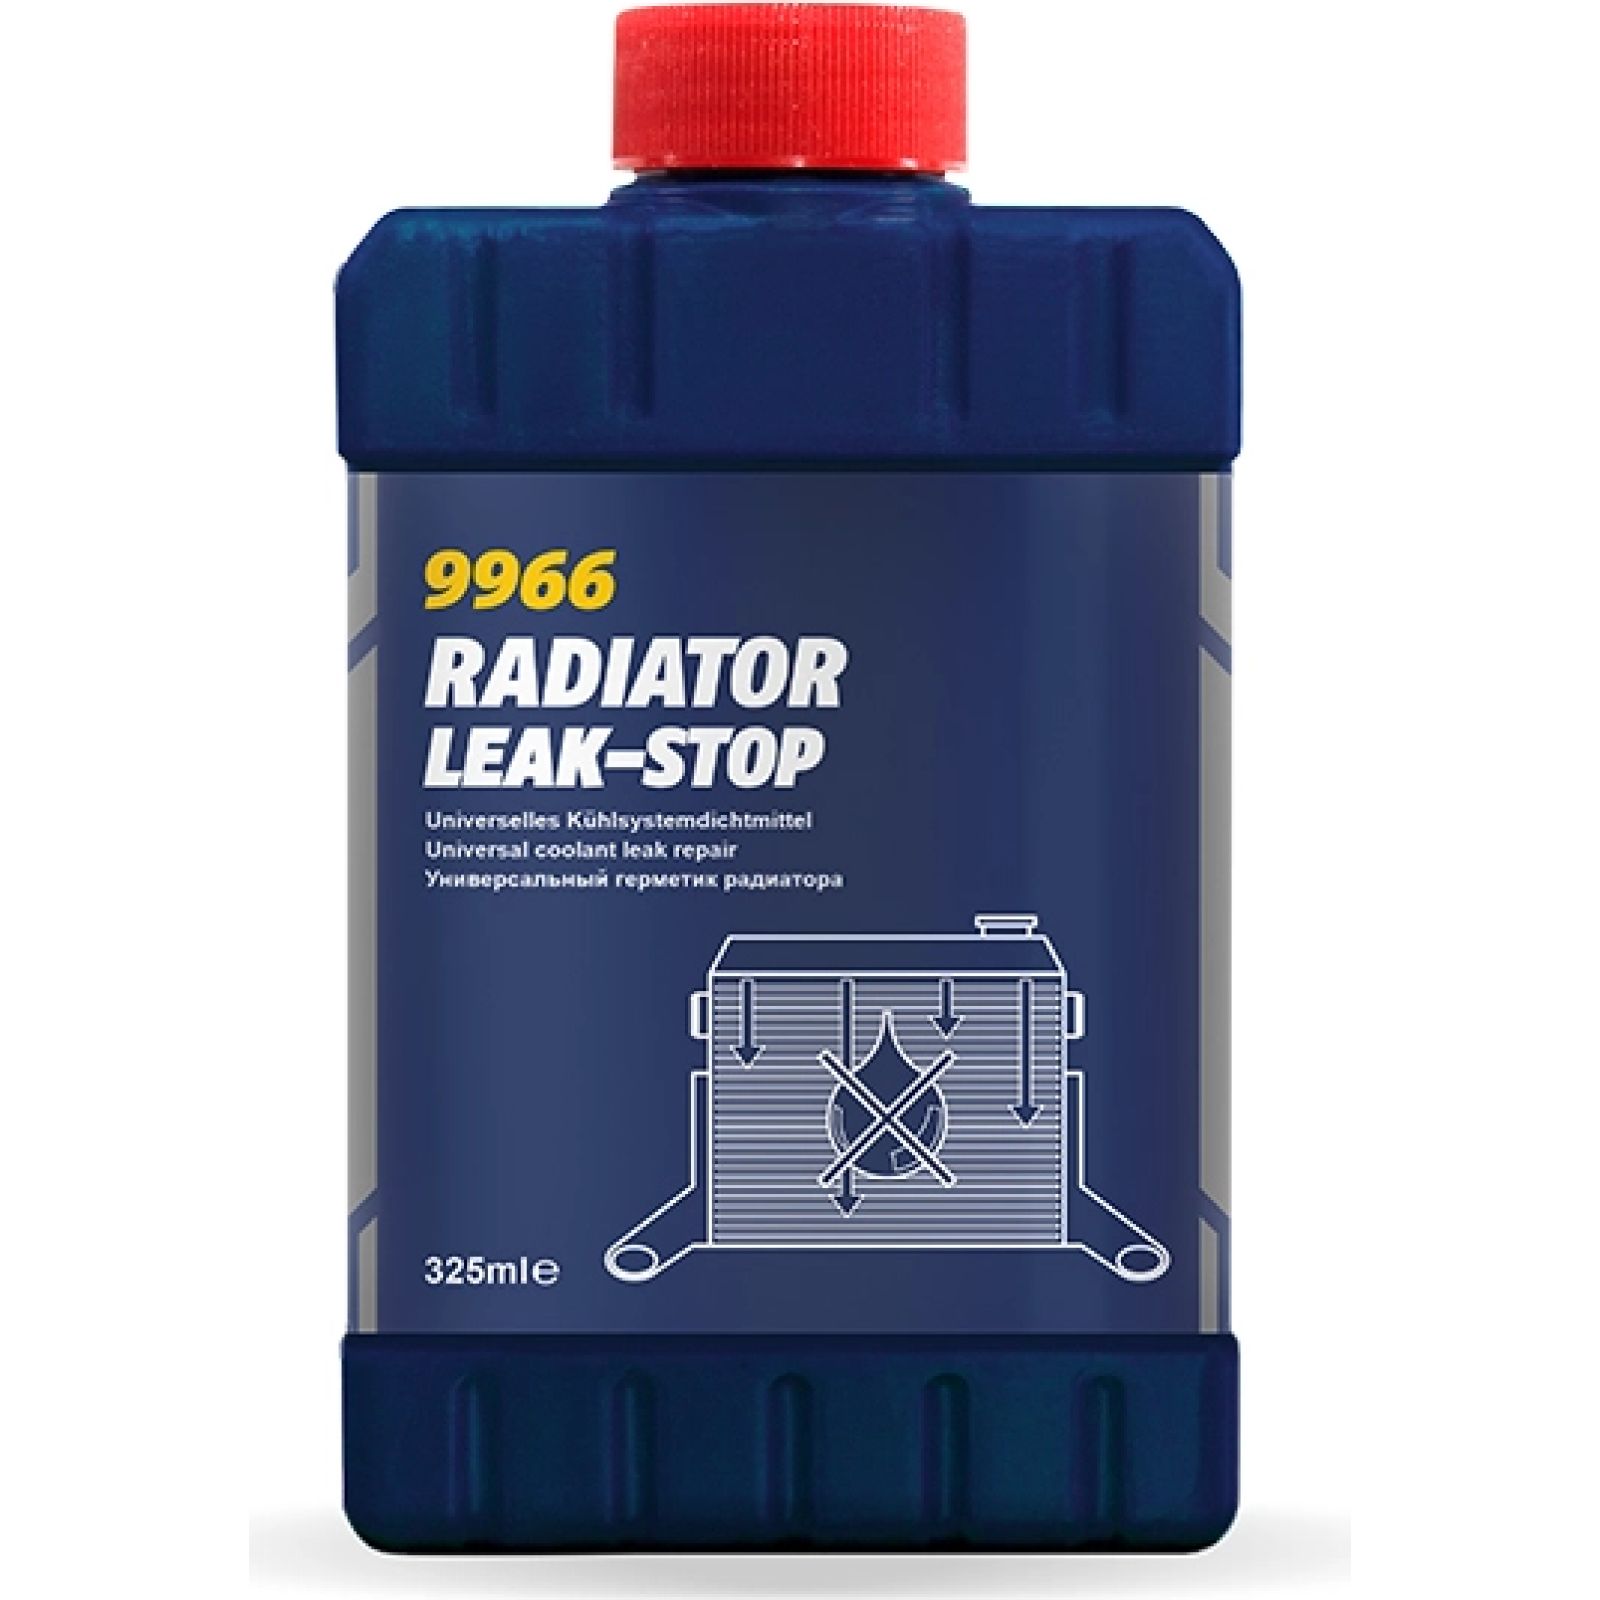 MANNOL Radiator Leak-Stop 9966 Kühlerdichtmittel 325ml